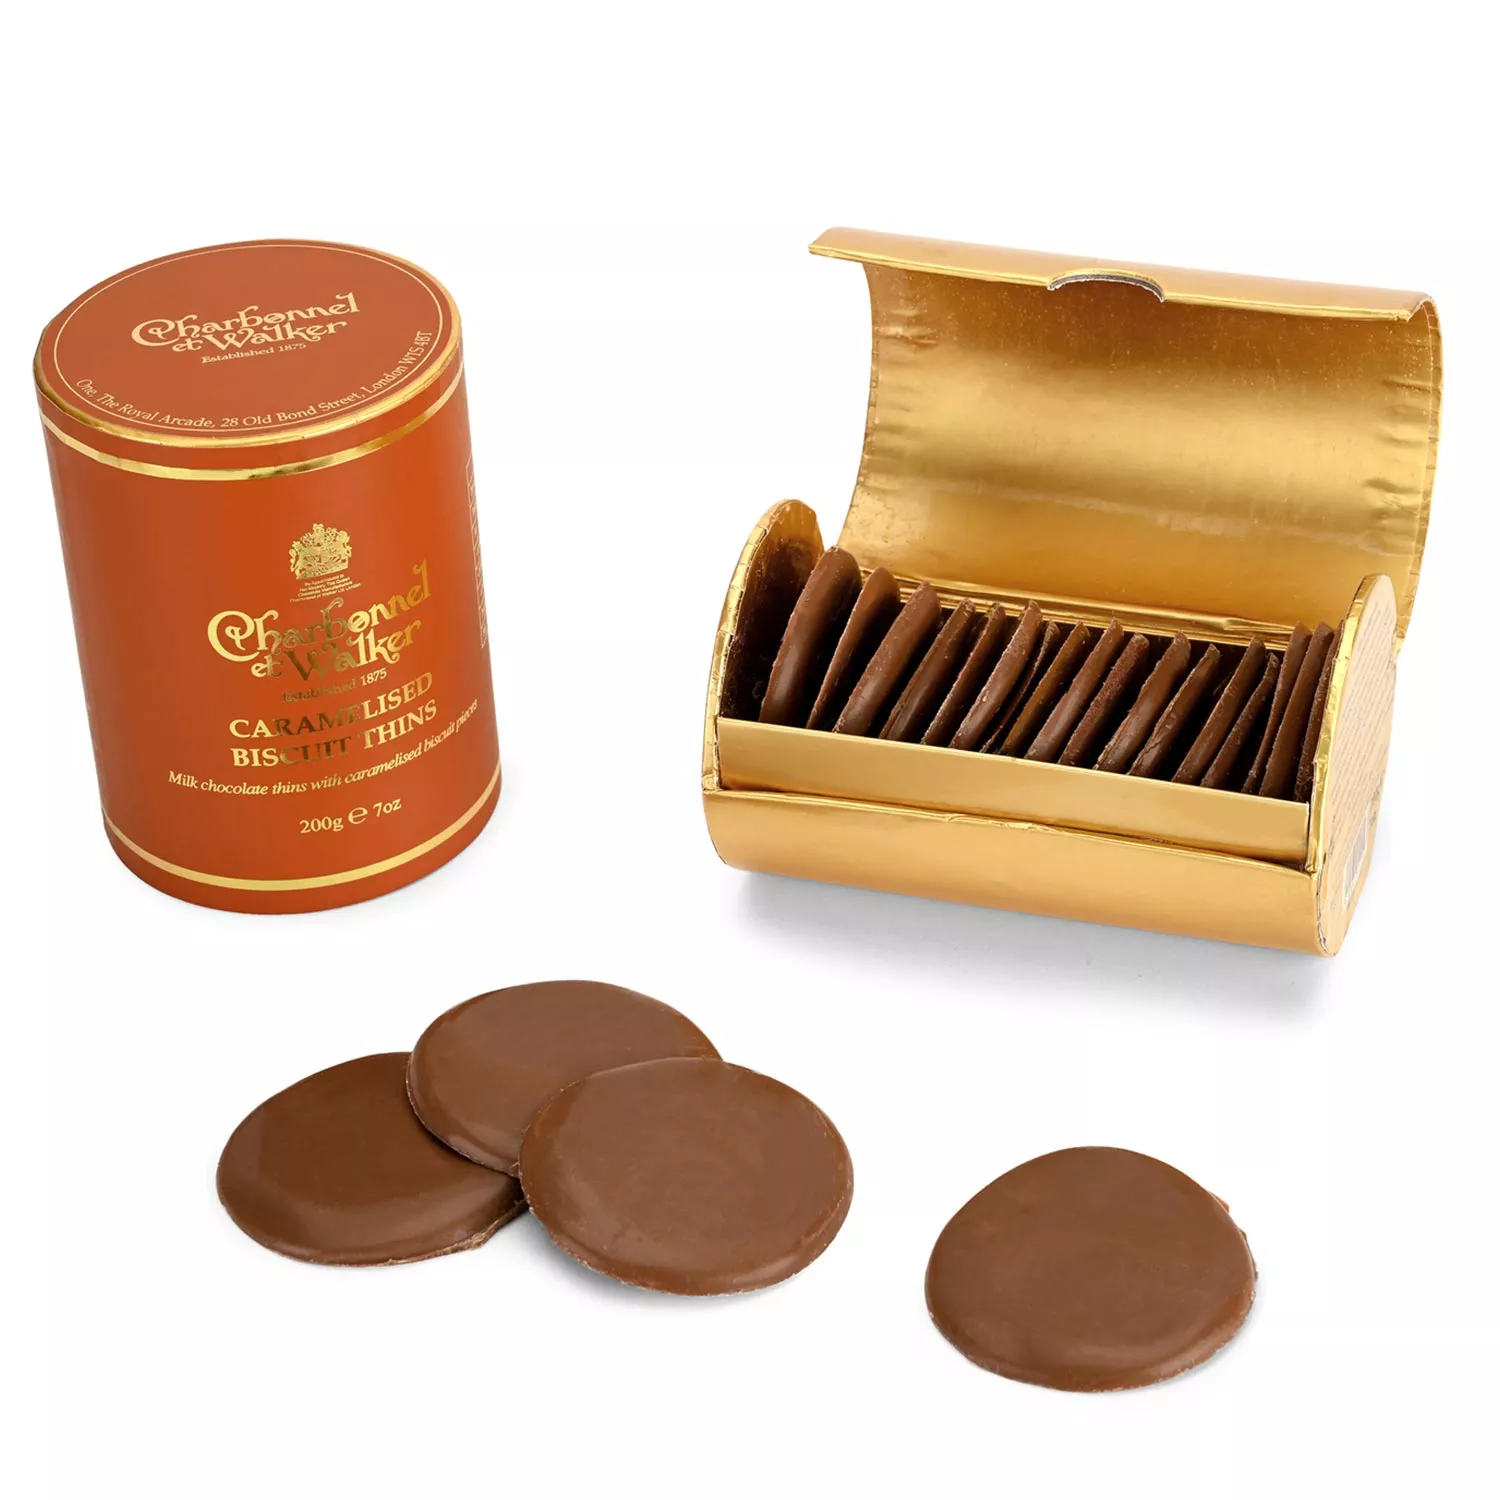 Charbonnel et Walker Chocolate Caramel Biscuit Thins